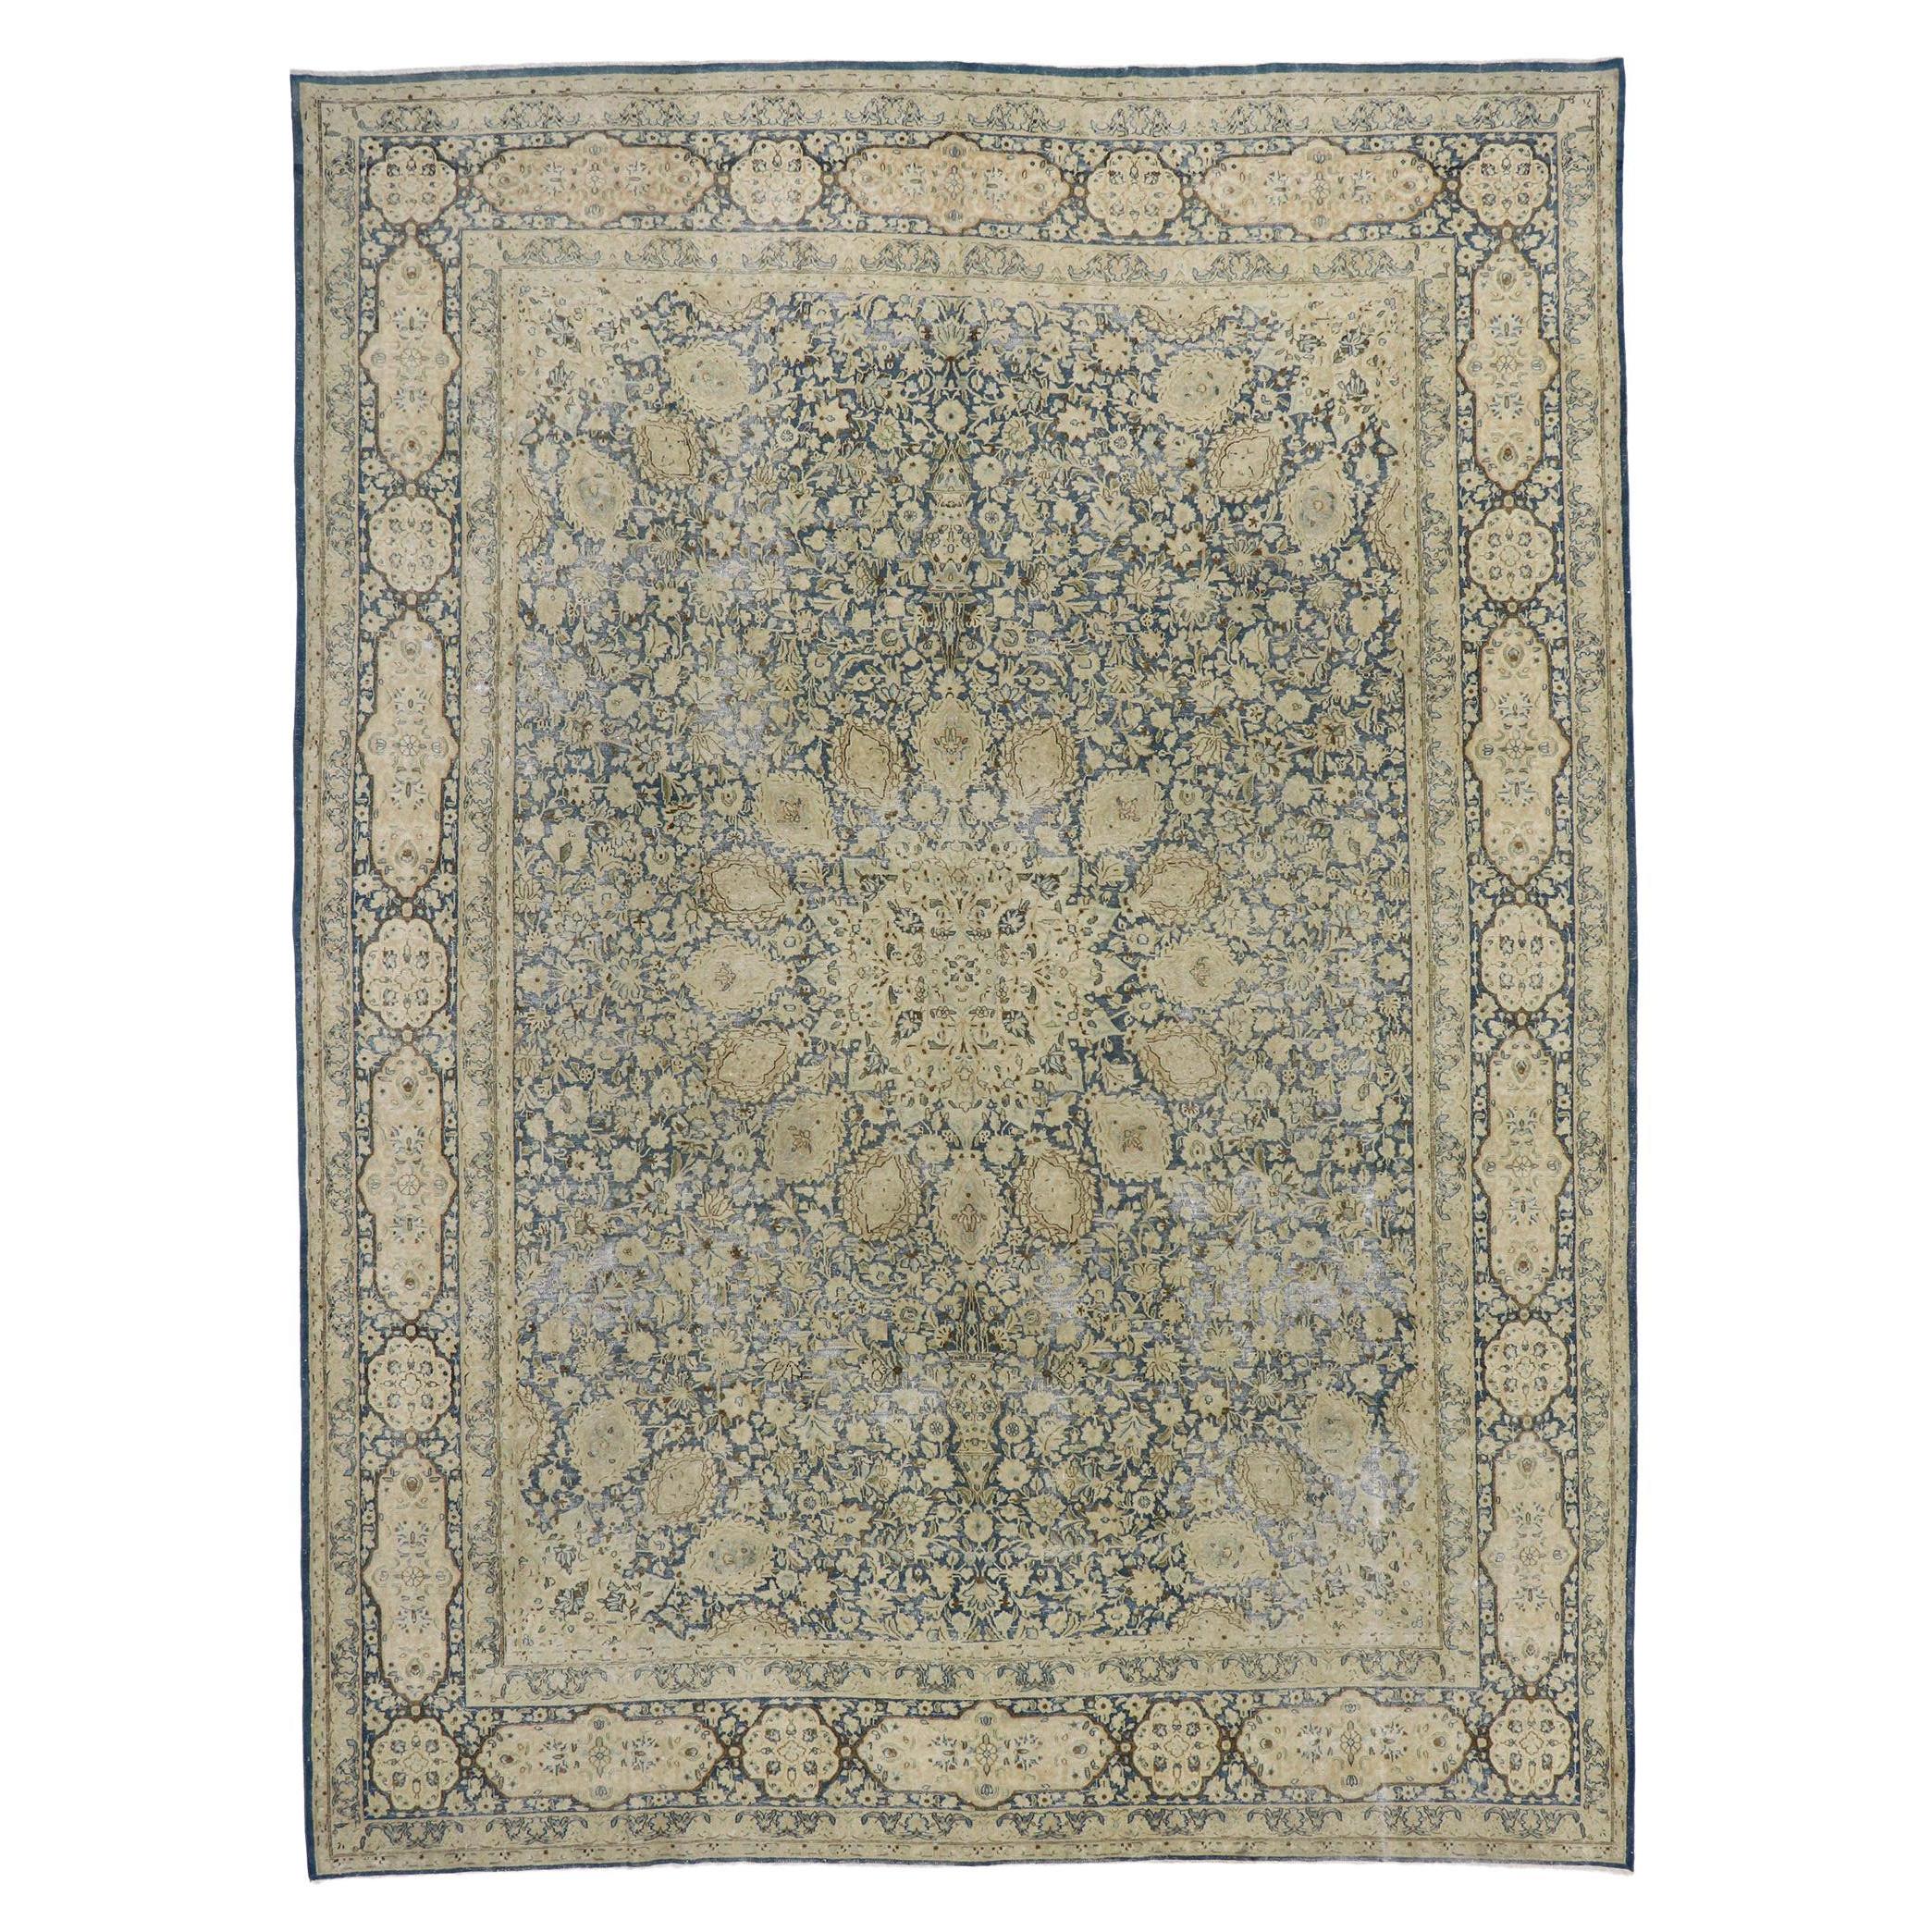 Distressed Antique Persian Kerman Rug with the Ardabil Carpet Design